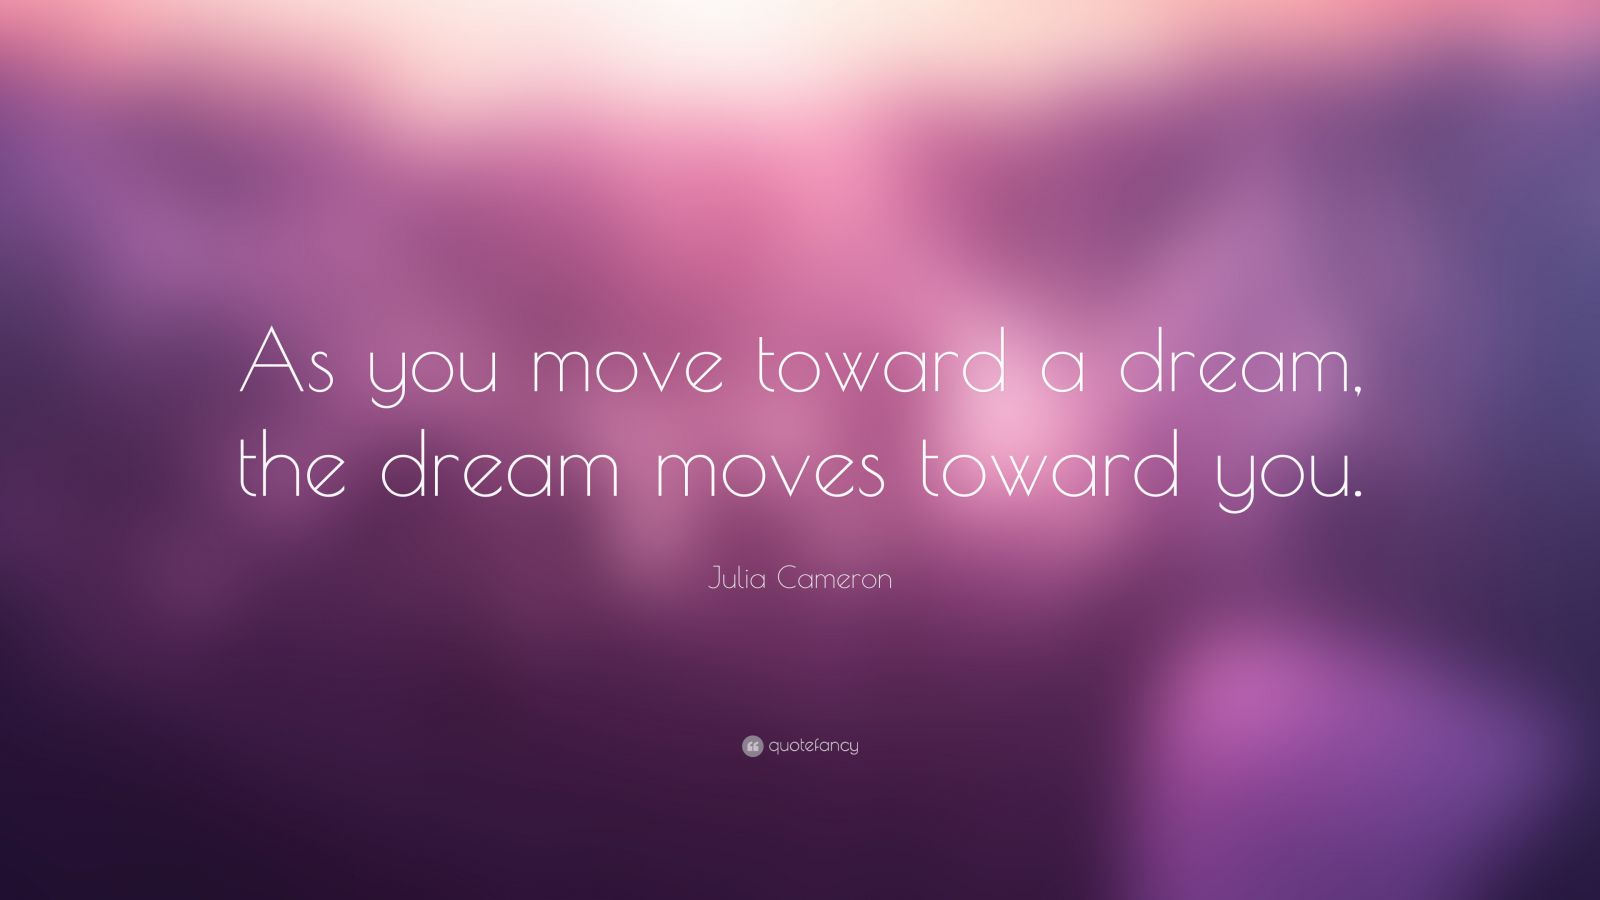 Julia Cameron Quote: “As you move toward a dream, the dream moves ...